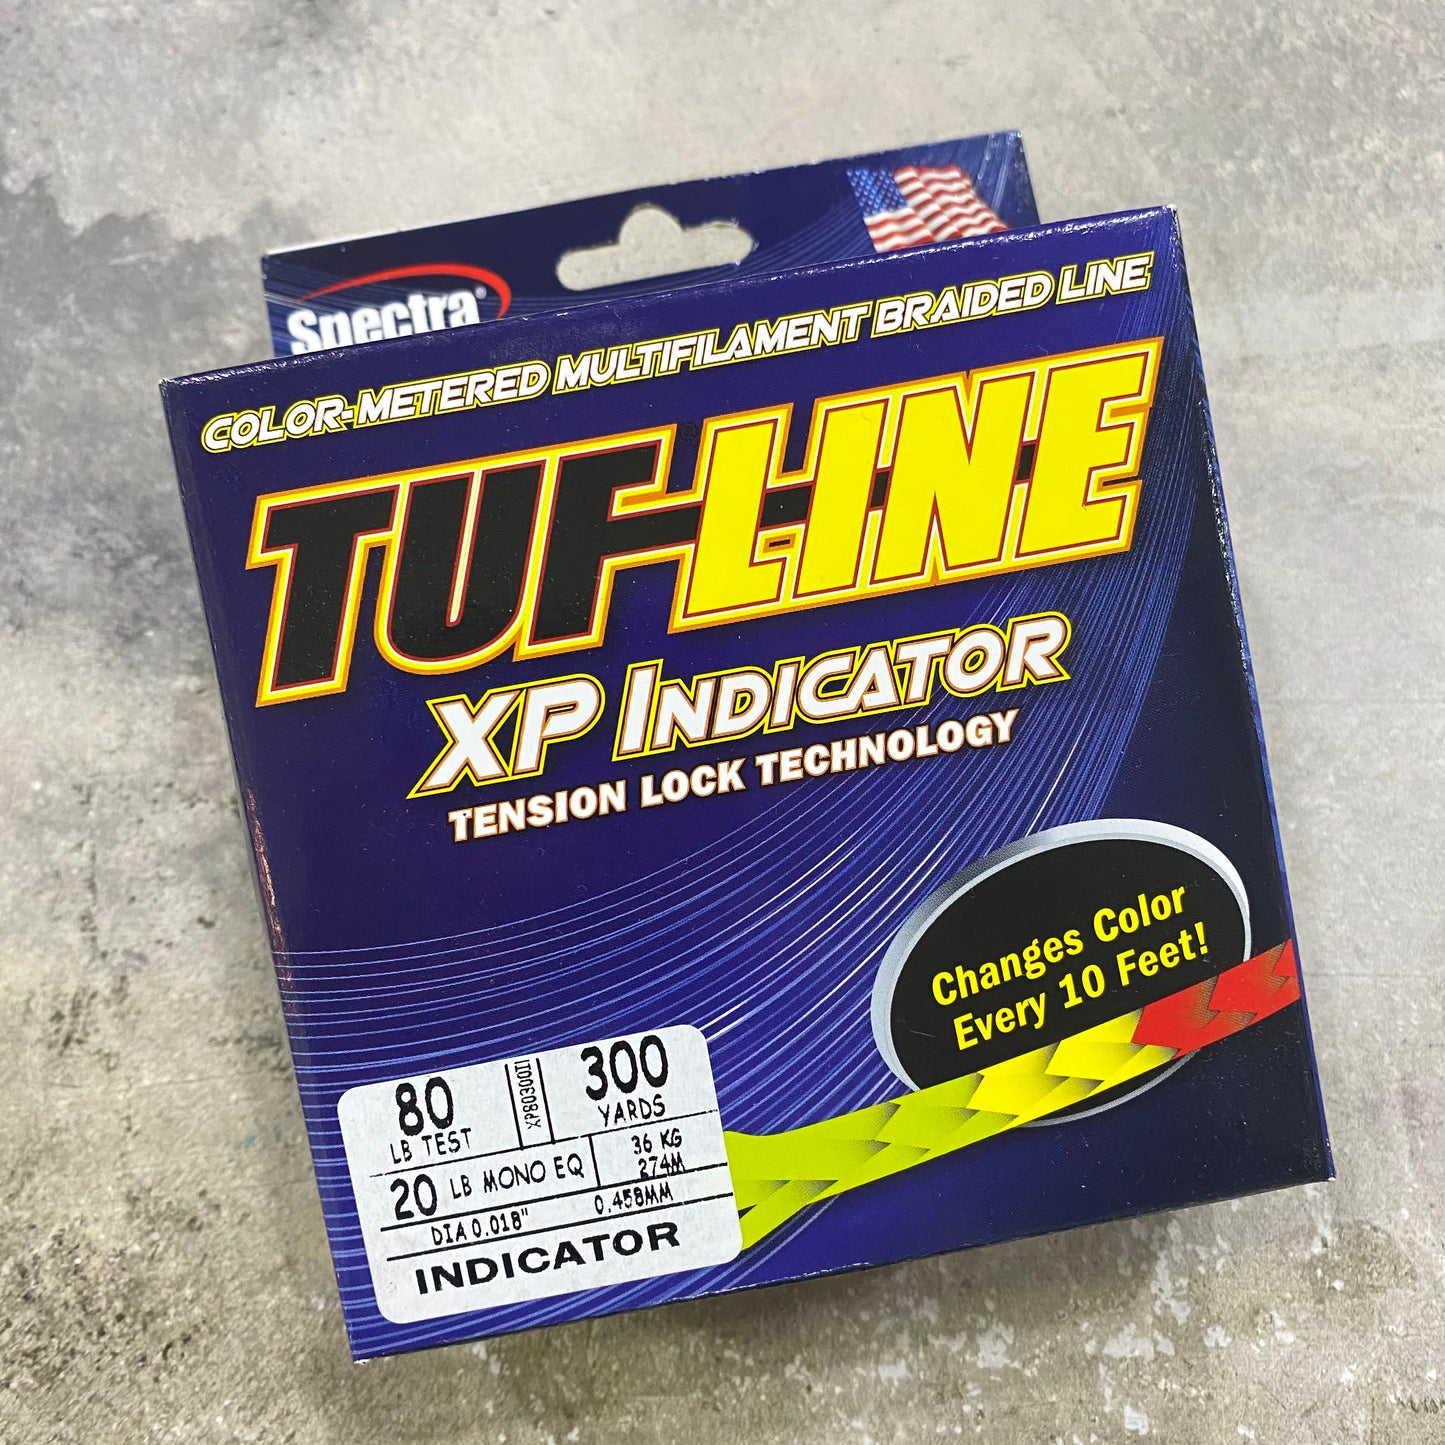 TUFLINE XP Indicator Superline